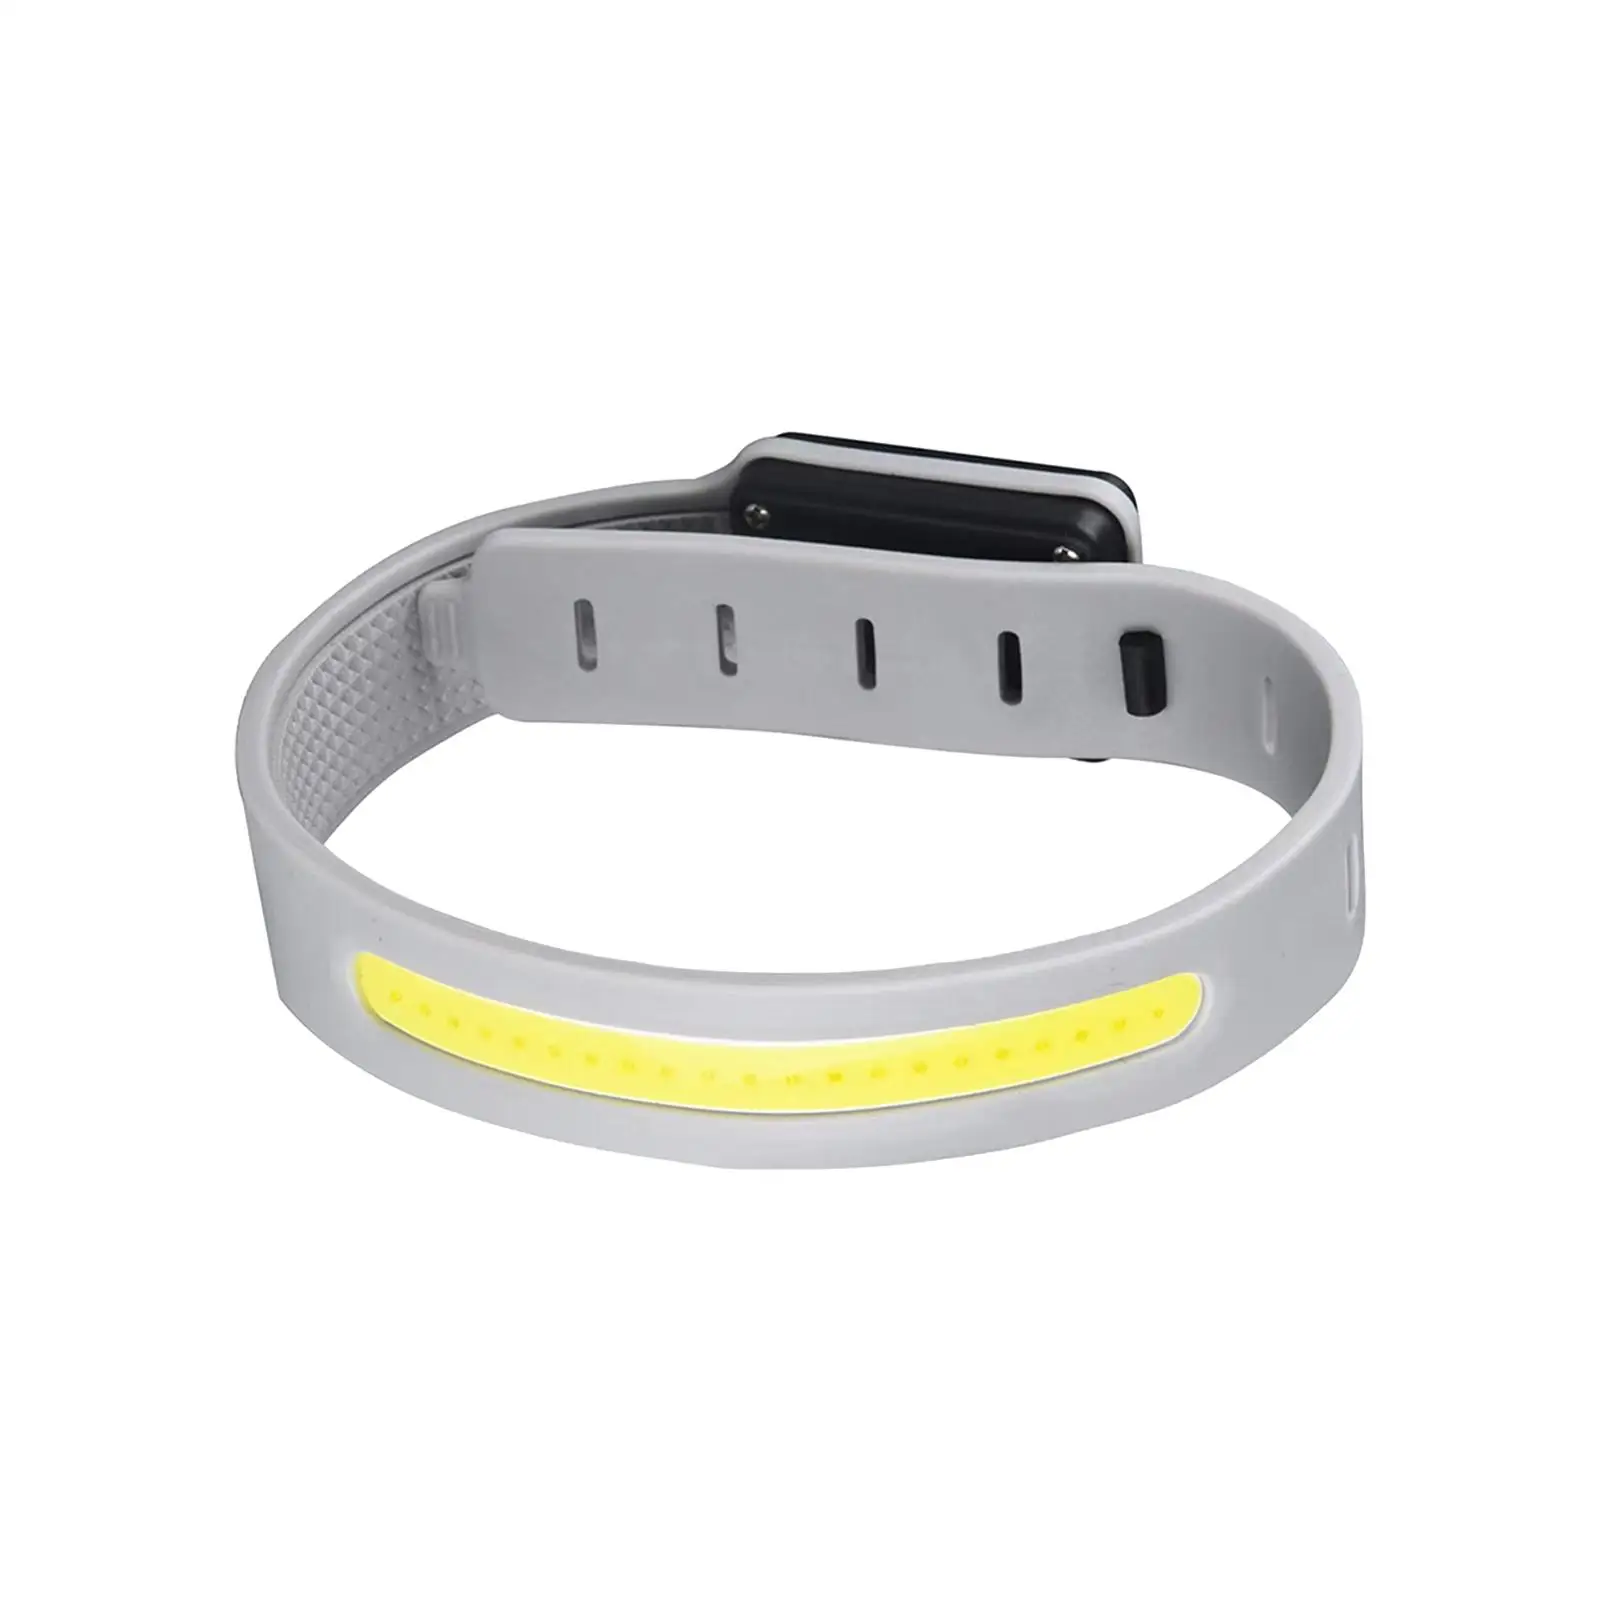 Light up Armband Light up Bracelet for Dog Walking Night Running Cycling